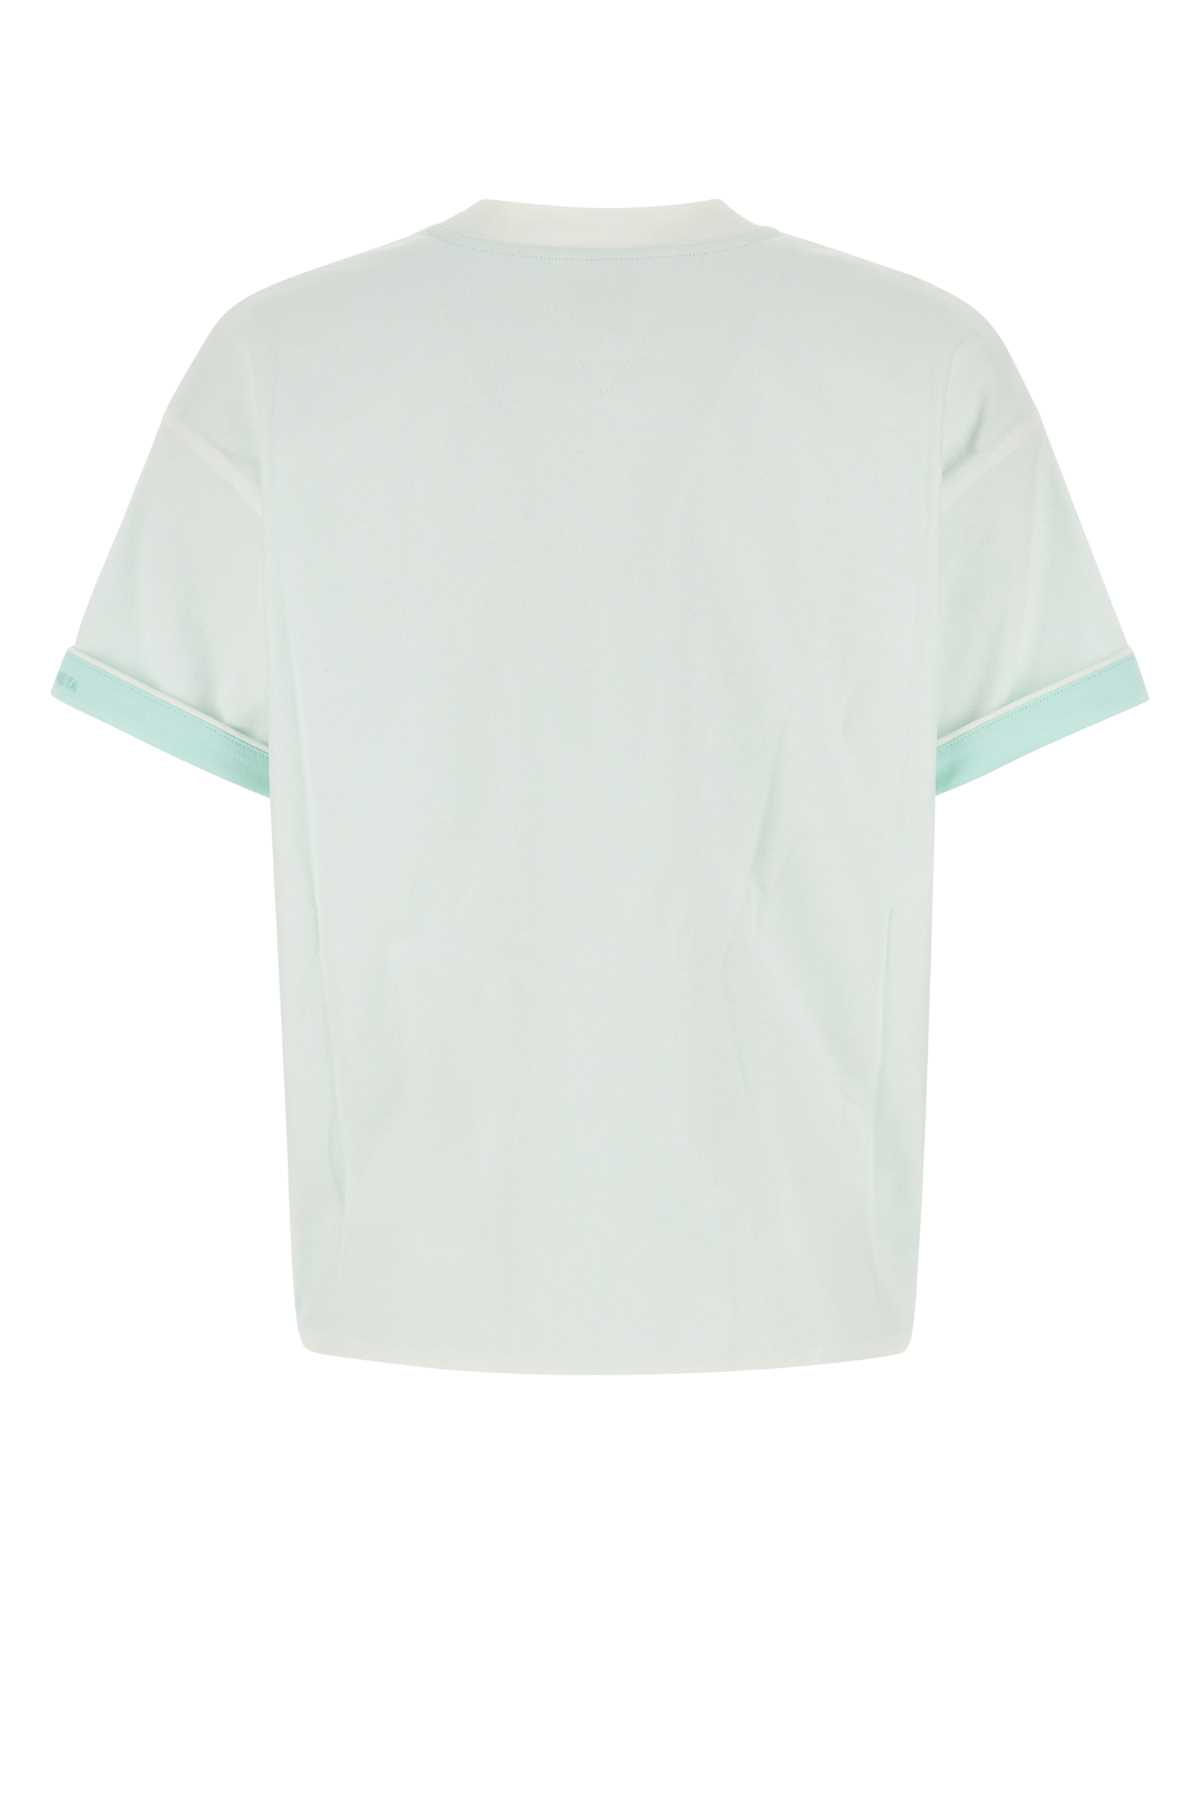 Bottega Veneta White Cotton T-shirt In Whitelightblue